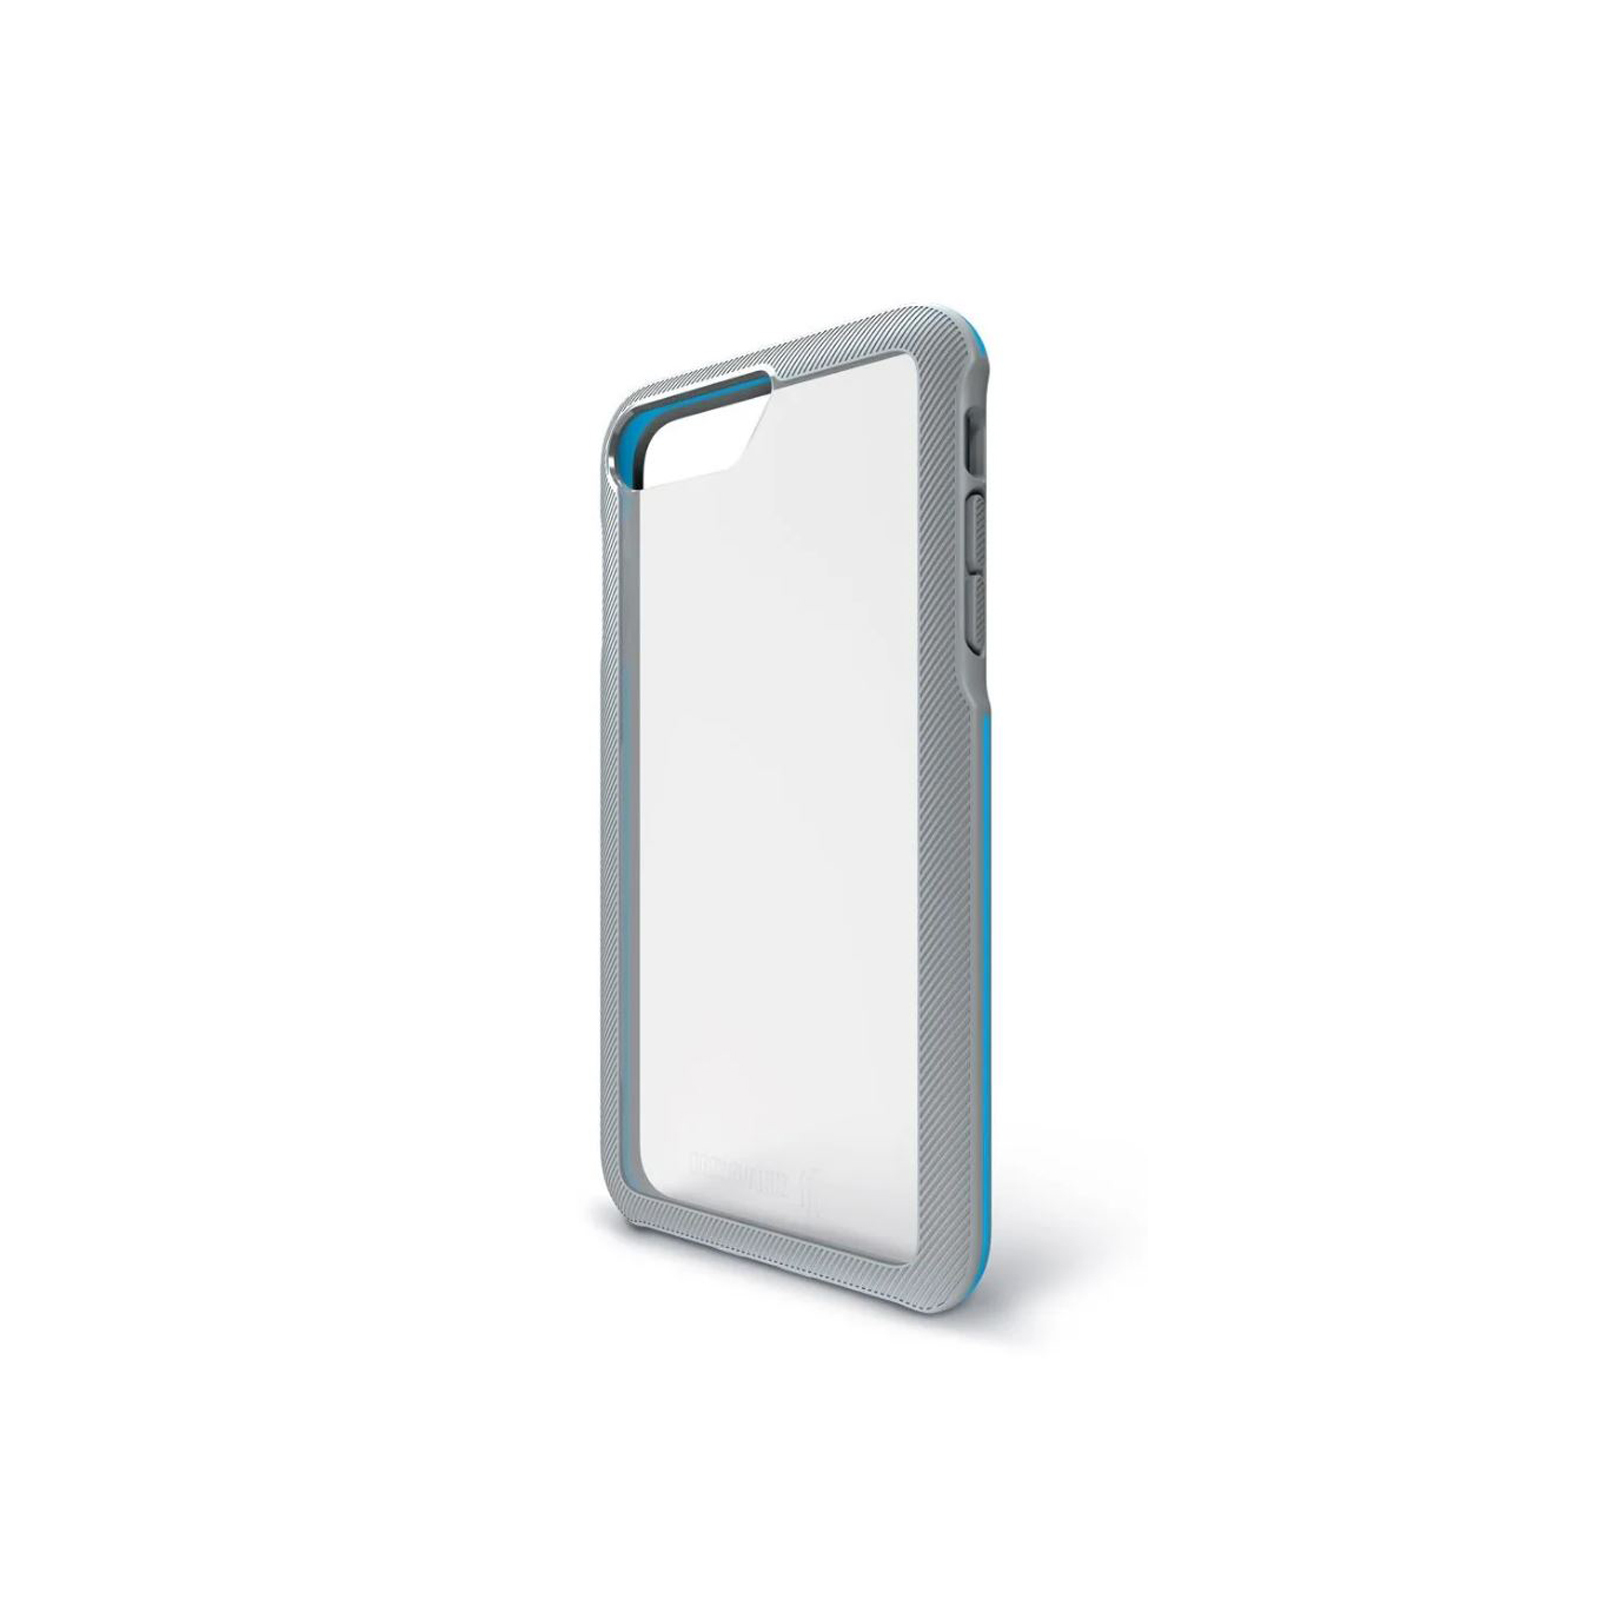 Trainr iPhone 6 / 7 / 8 Case [Gray / Blue]